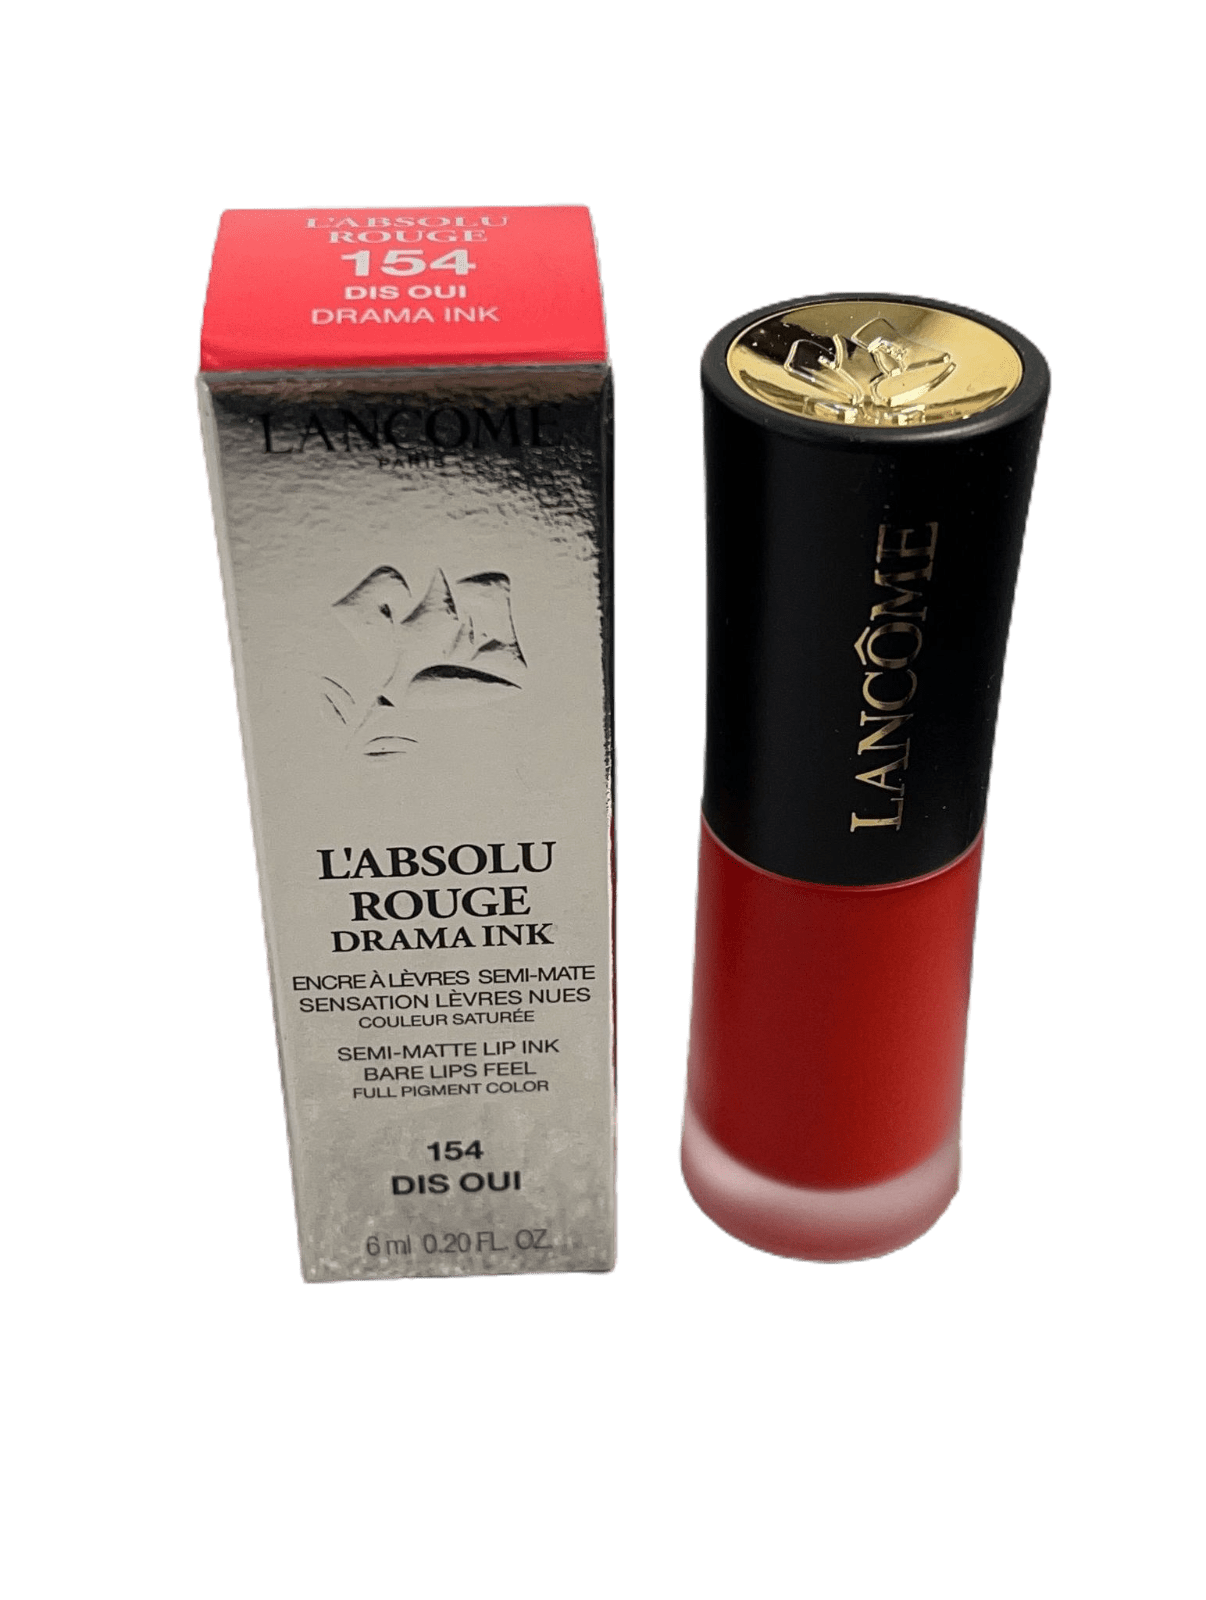 Lancome L'Absolu Rouge Drama Ink Semi-Matte Lip Ink-311 Rose